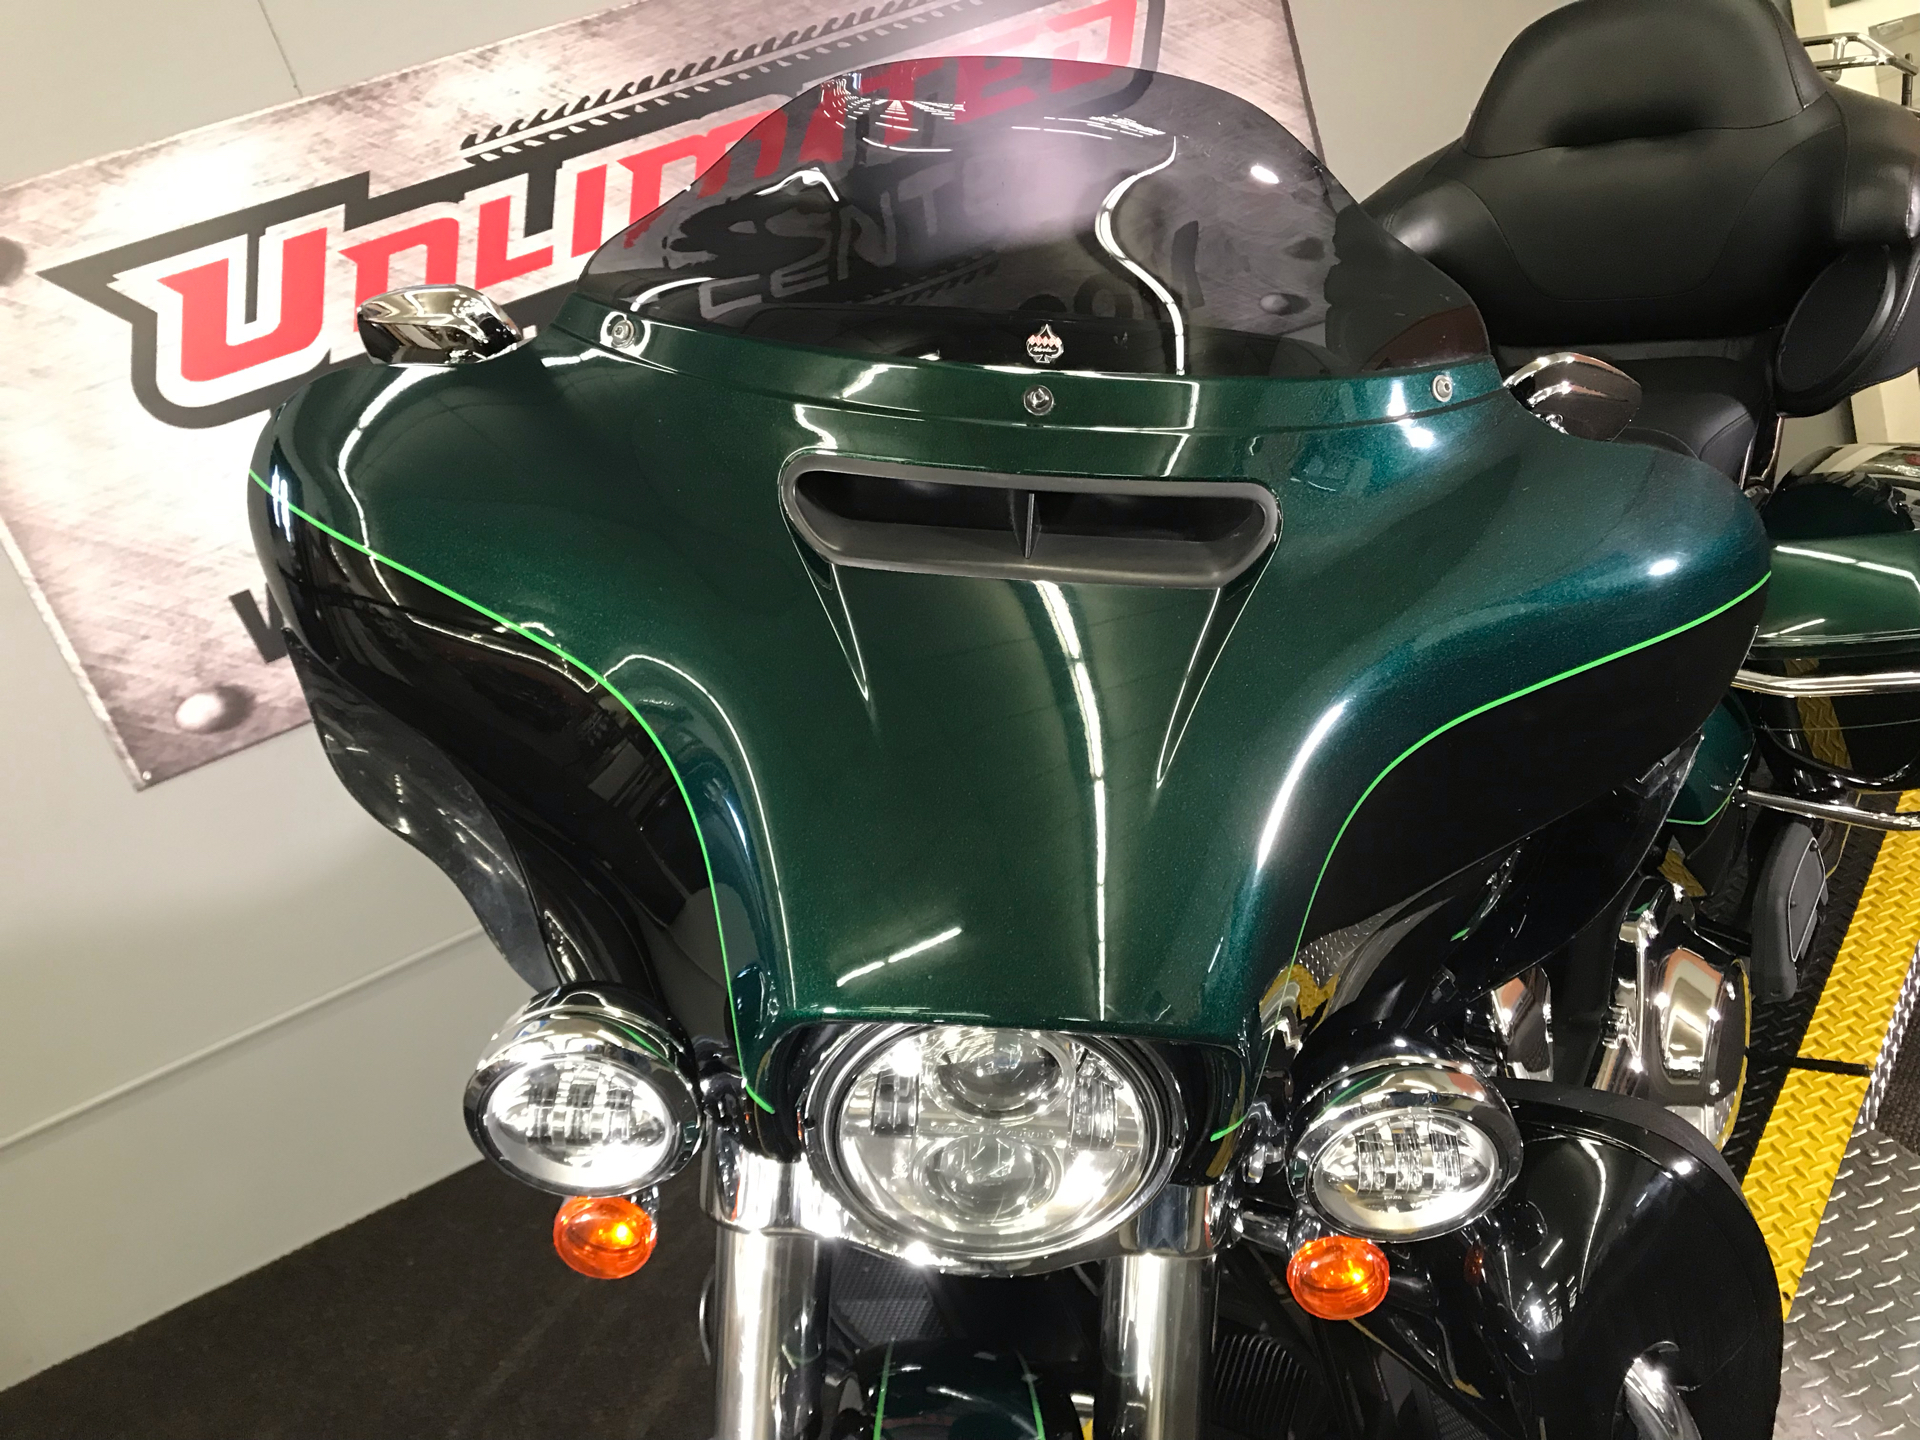 2015 Harley-Davidson Ultra Limited in Tyrone, Pennsylvania - Photo 8